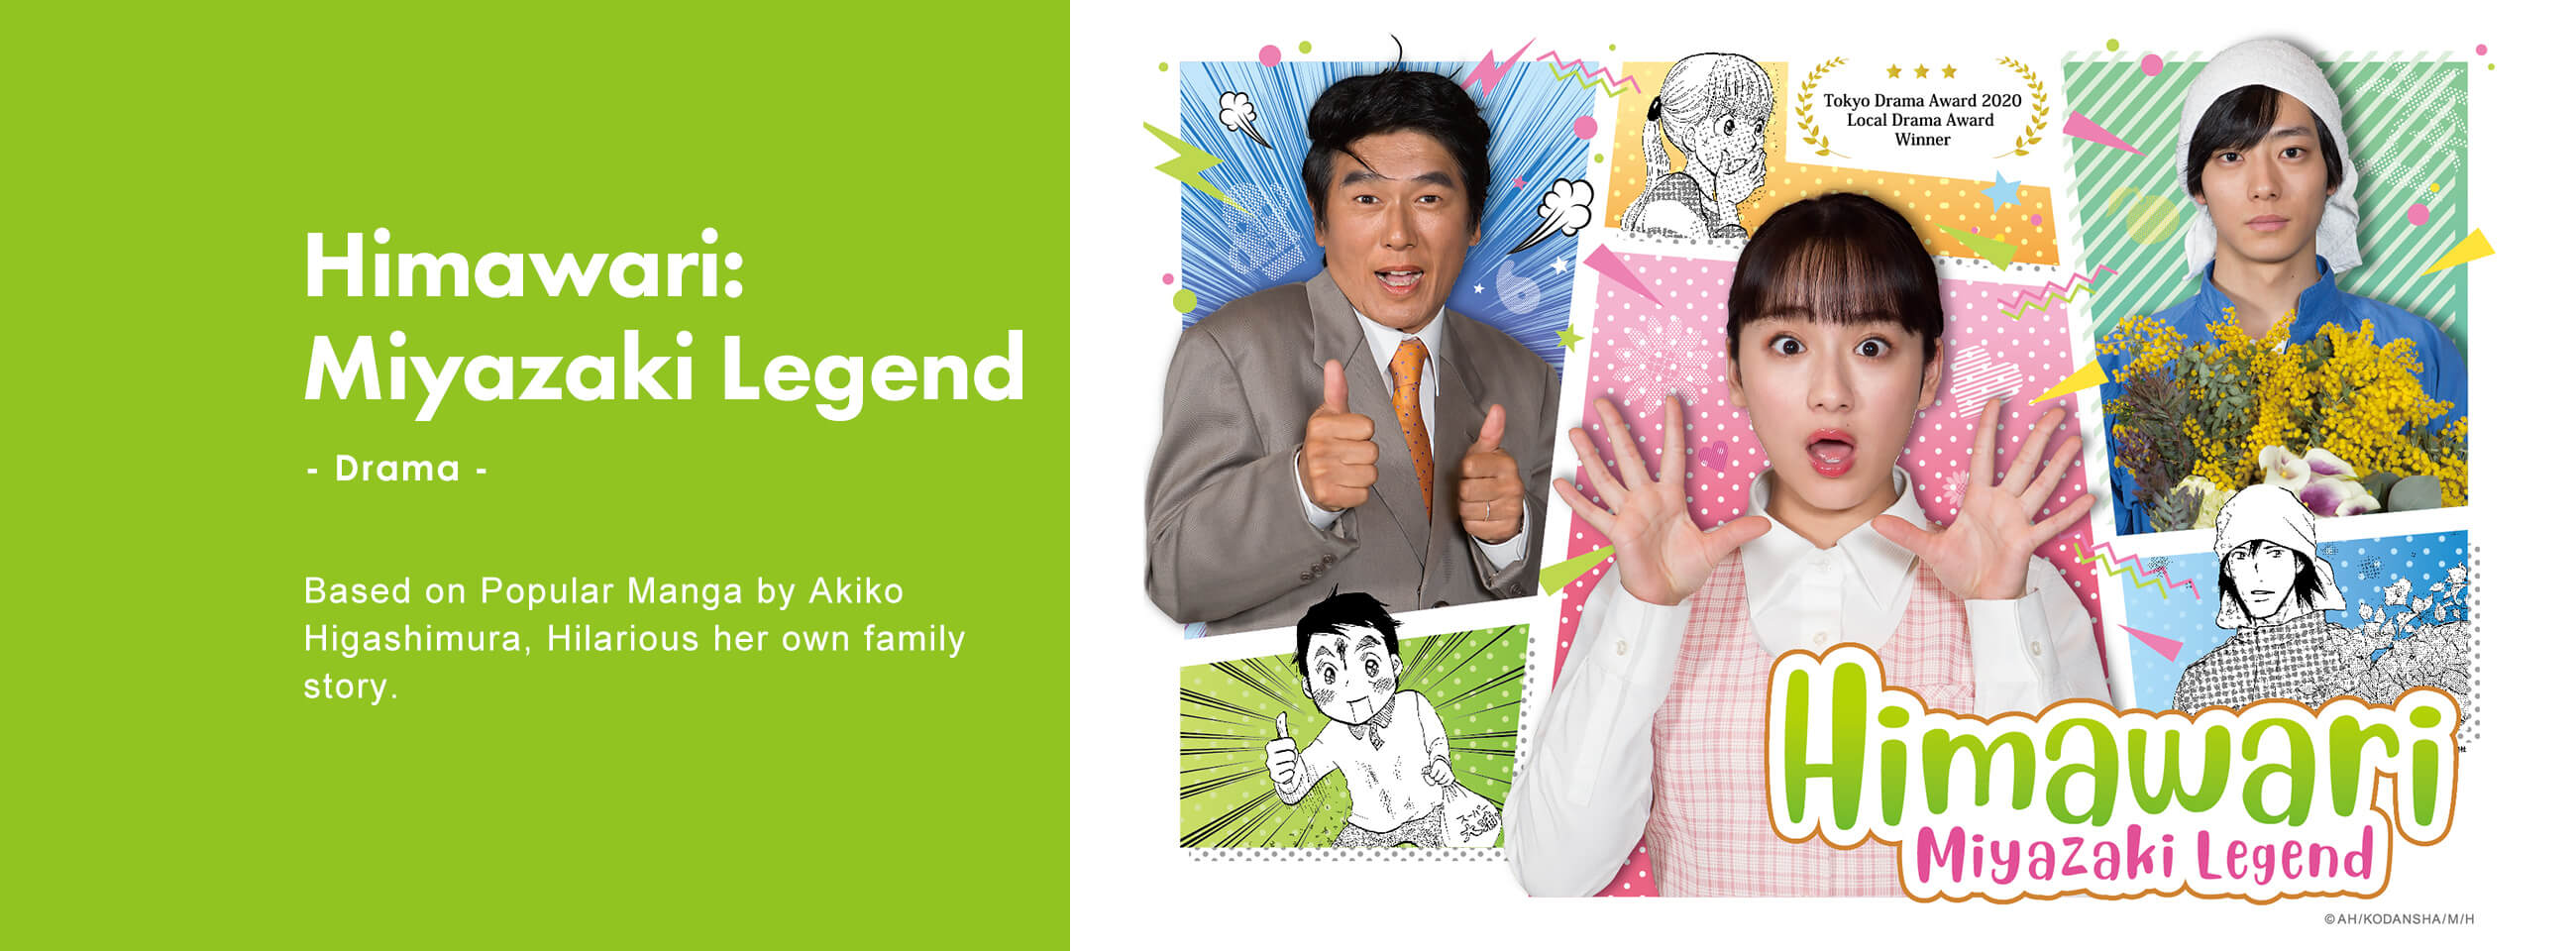 Himawari: Miyazaki Legend - Drama - Based on Popular Manga by Akiko Higashimura, Hilarious her own family story.